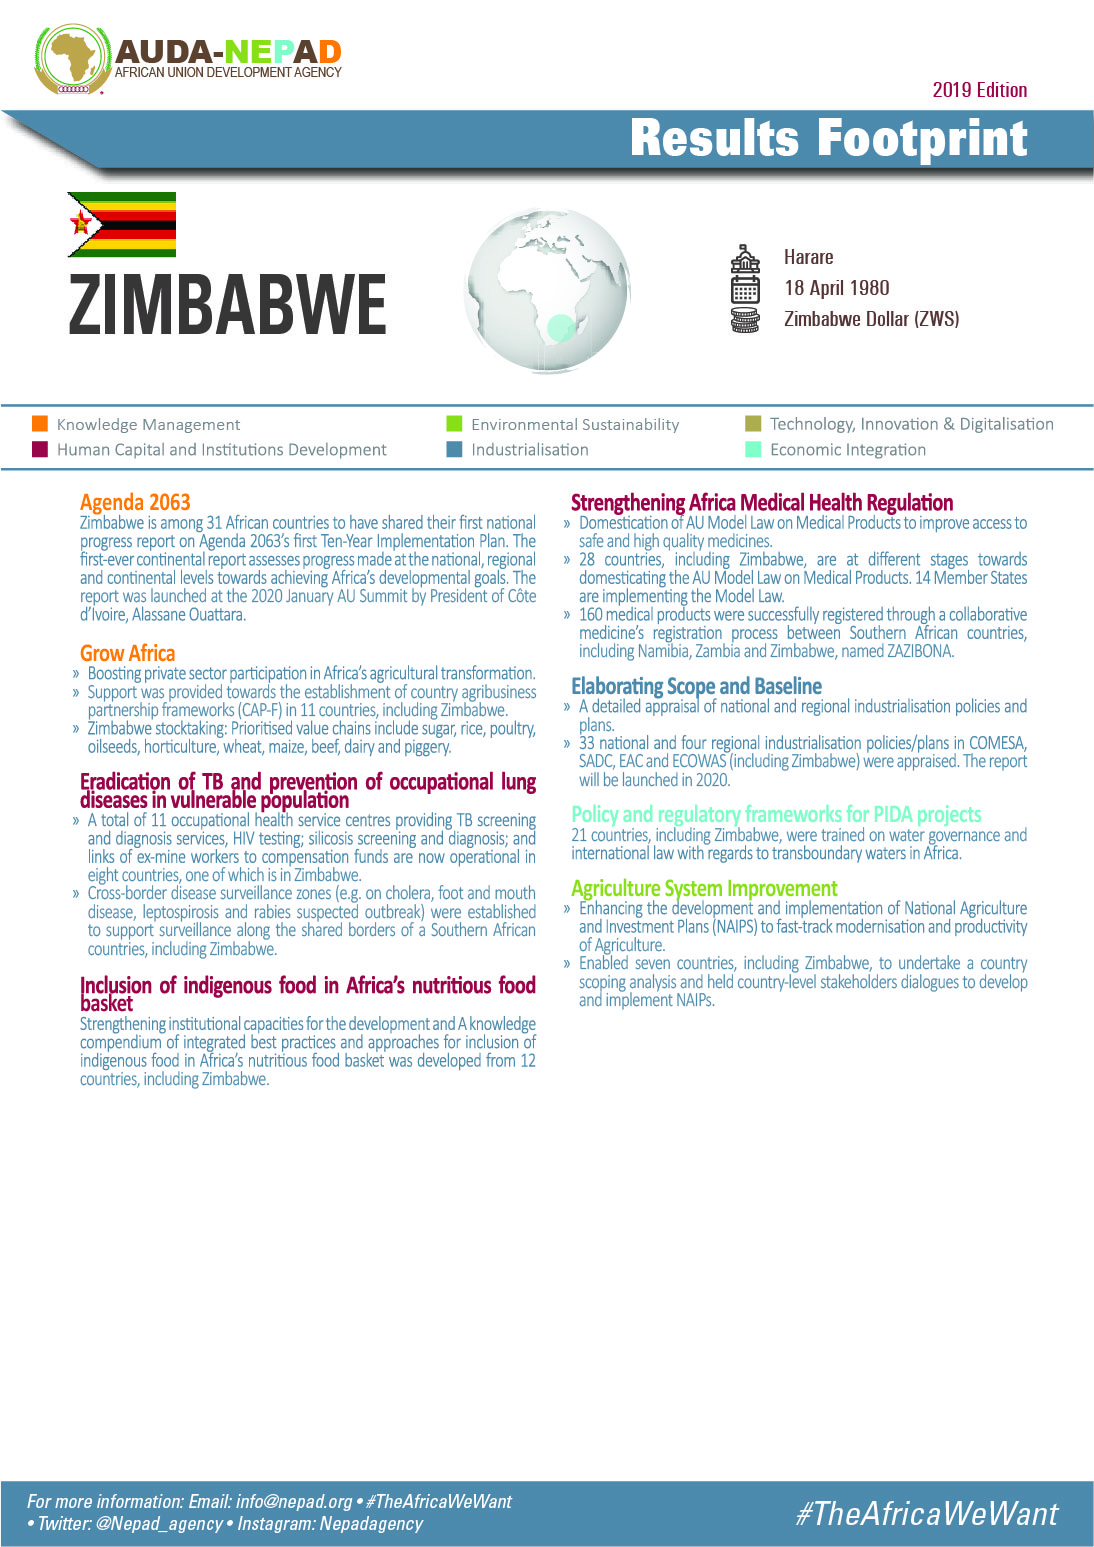 2019 AUDA-NEPAD Footprint: Country Profiles: Zimbabwe